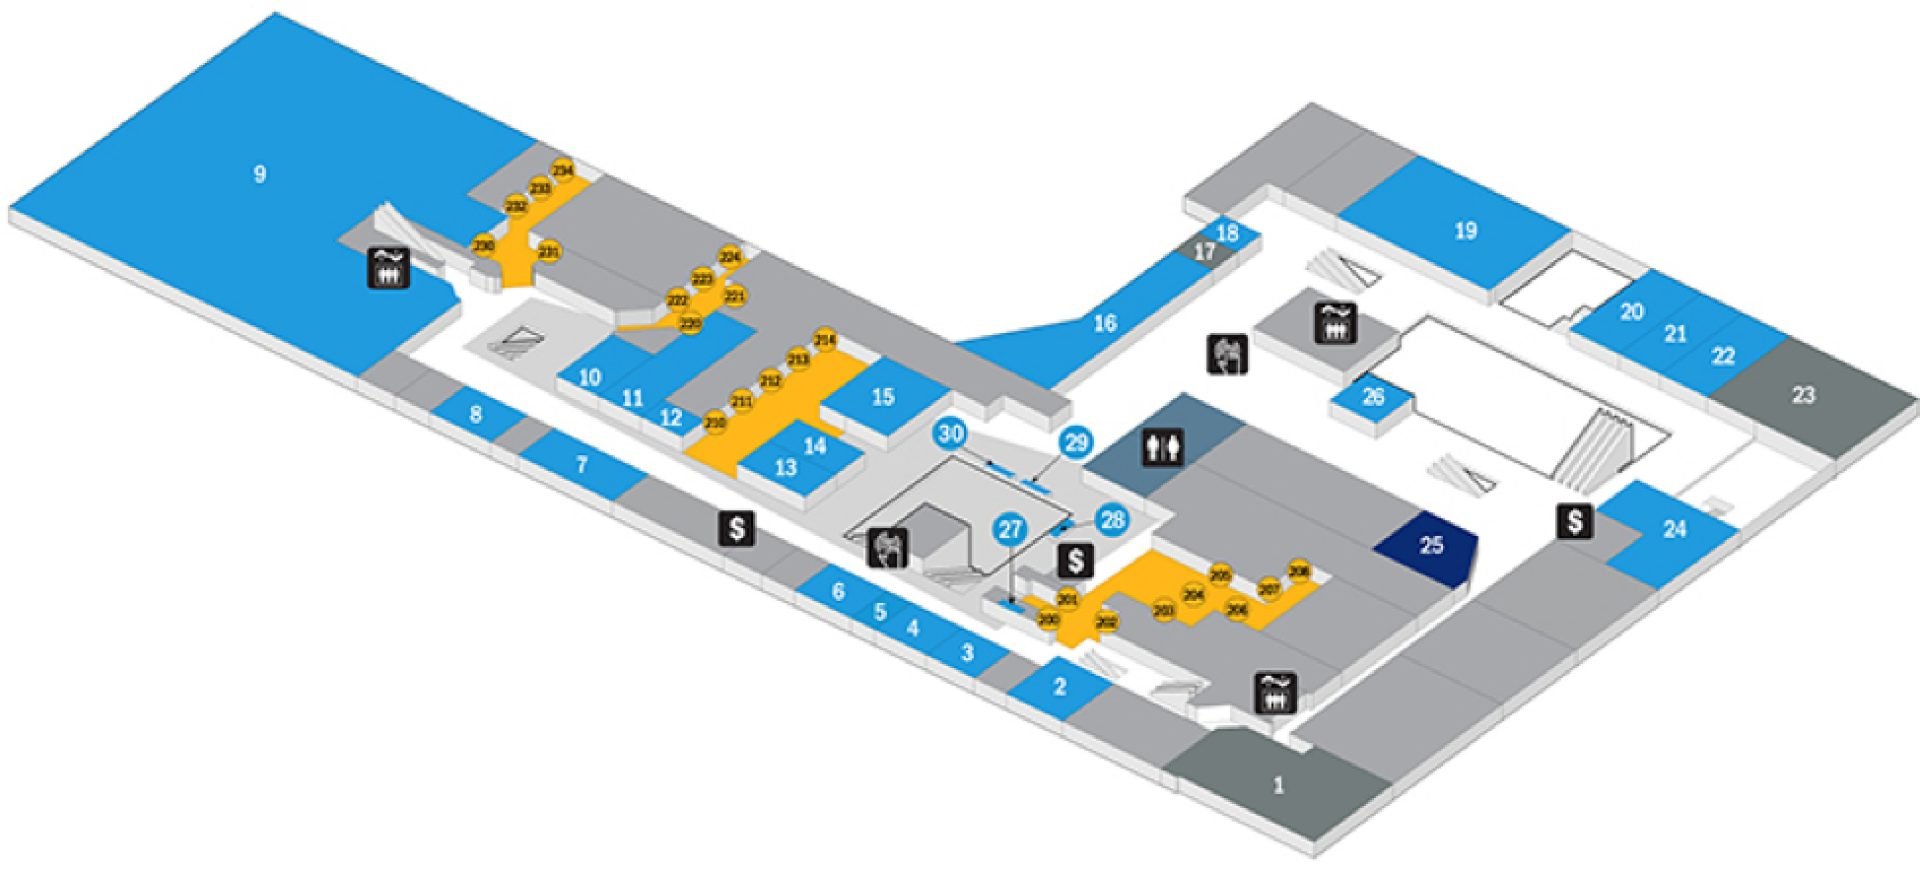 Port Authority Bus Terminal Interior Map - Level 2